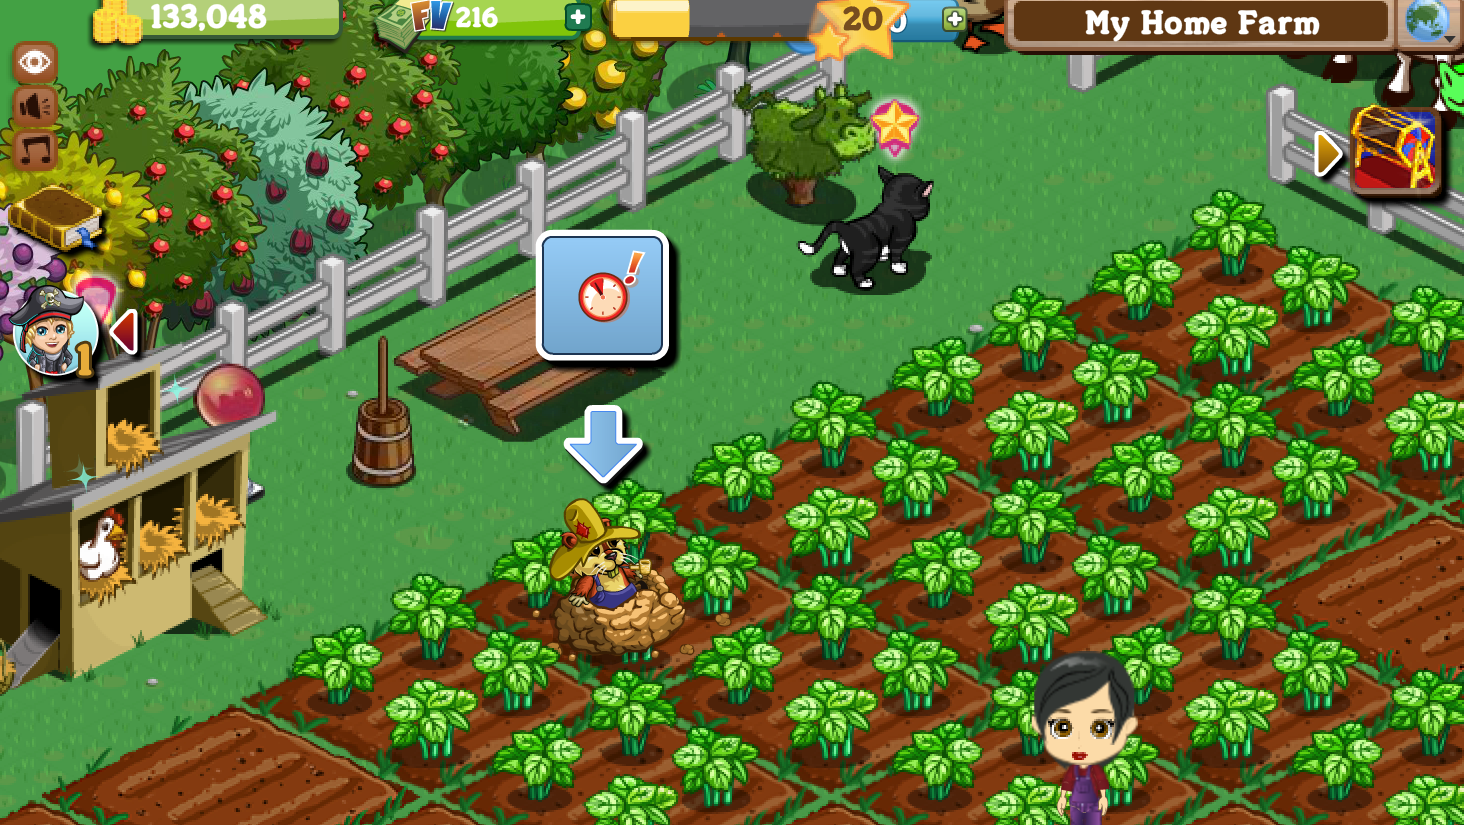 Virtual me is regretting the decision to visit my old FarmVille farm. (Screenshot: FarmVille/Zynga)